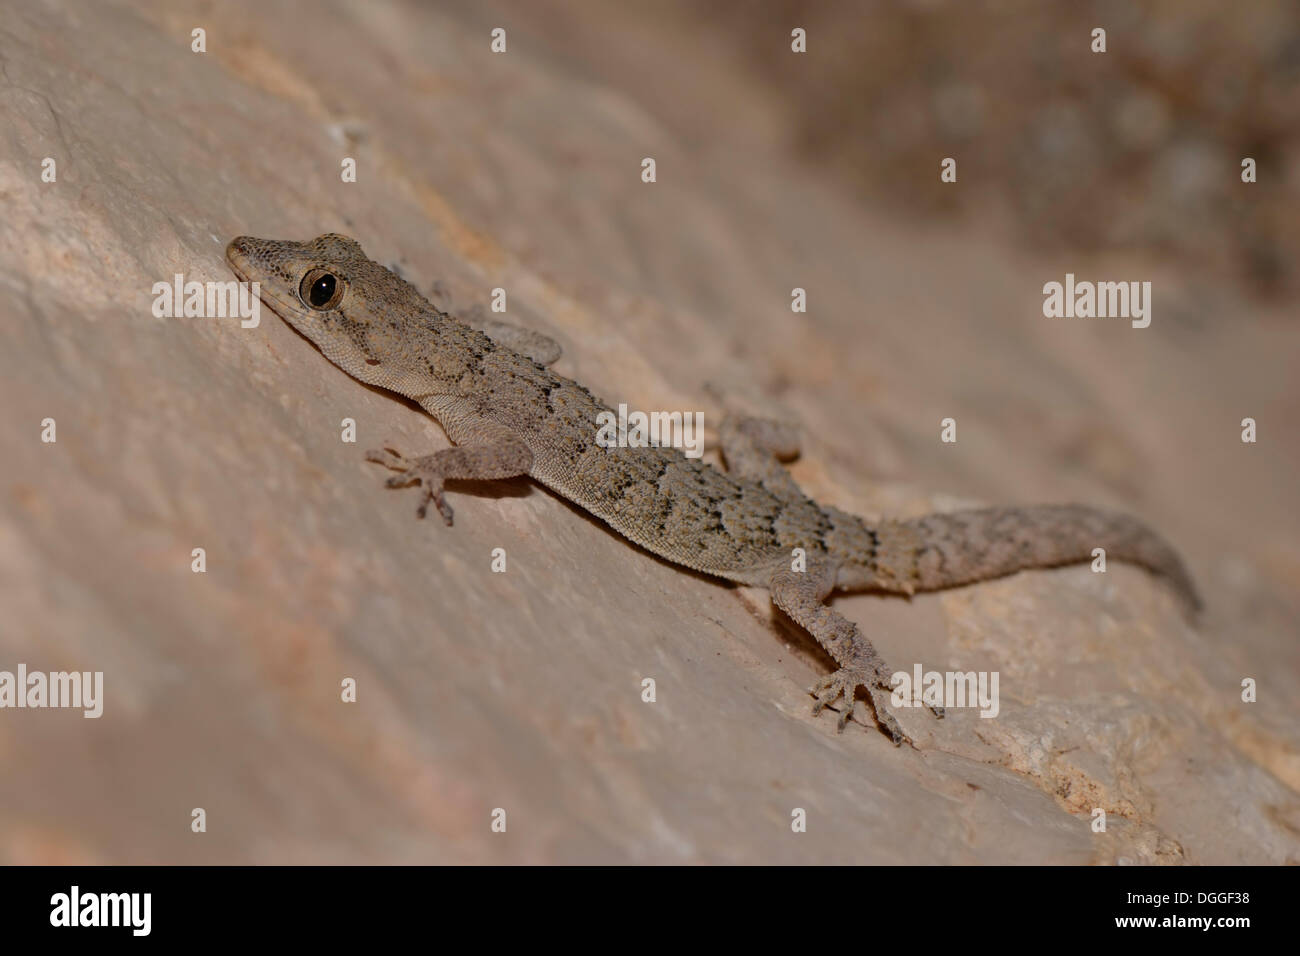 Kotschy's Gecko (Mediodactylus kotschyi) on a rock, Kaş, Lycia, Province of Antalya, Turkey Stock Photo